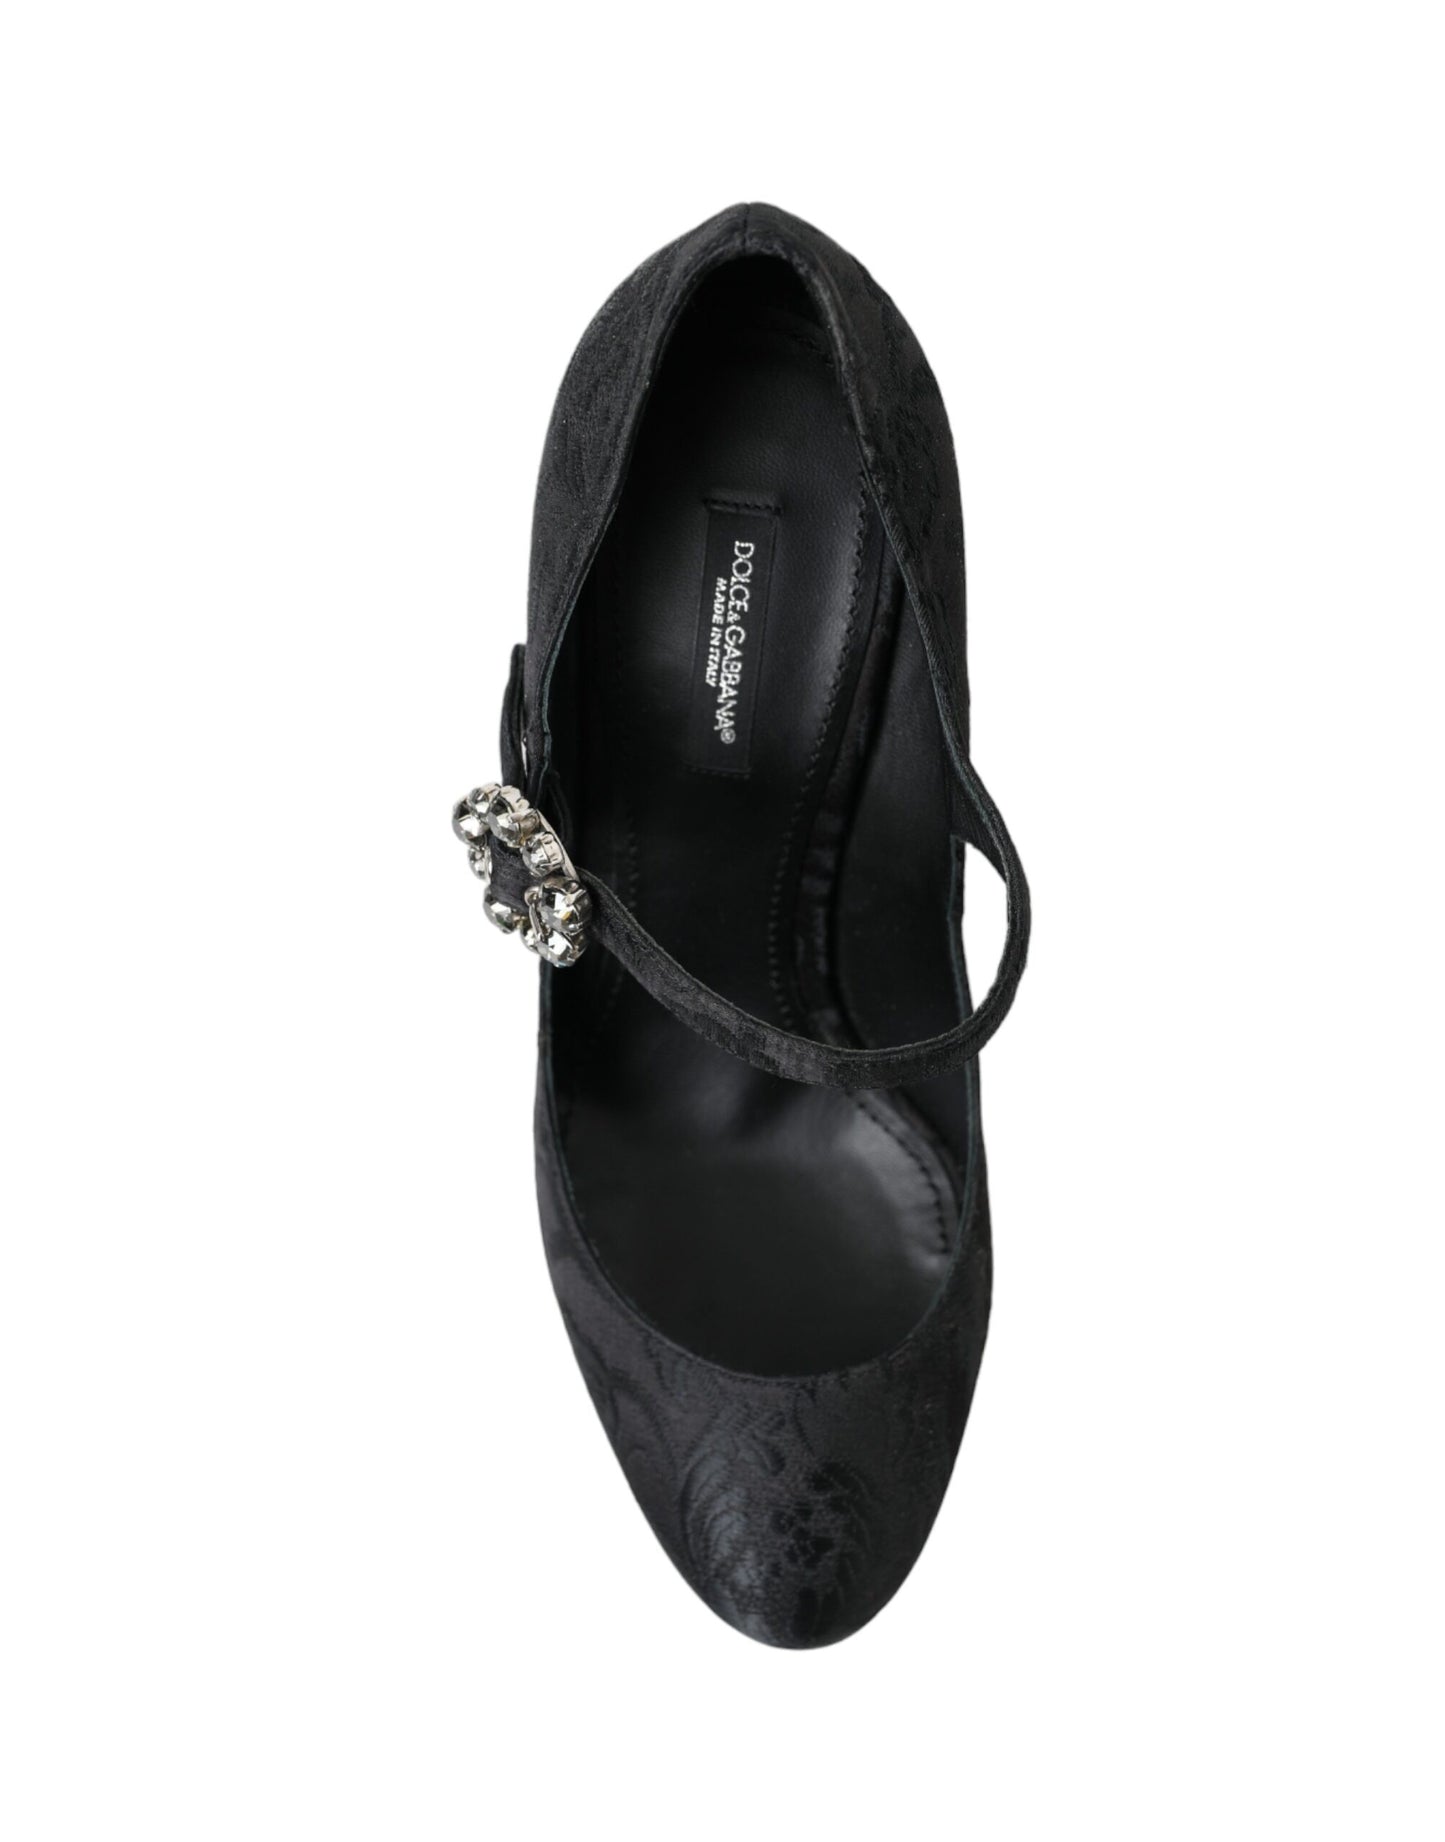 Dolce & Gabbana Chic Black Brocade Mary Janes Pumps